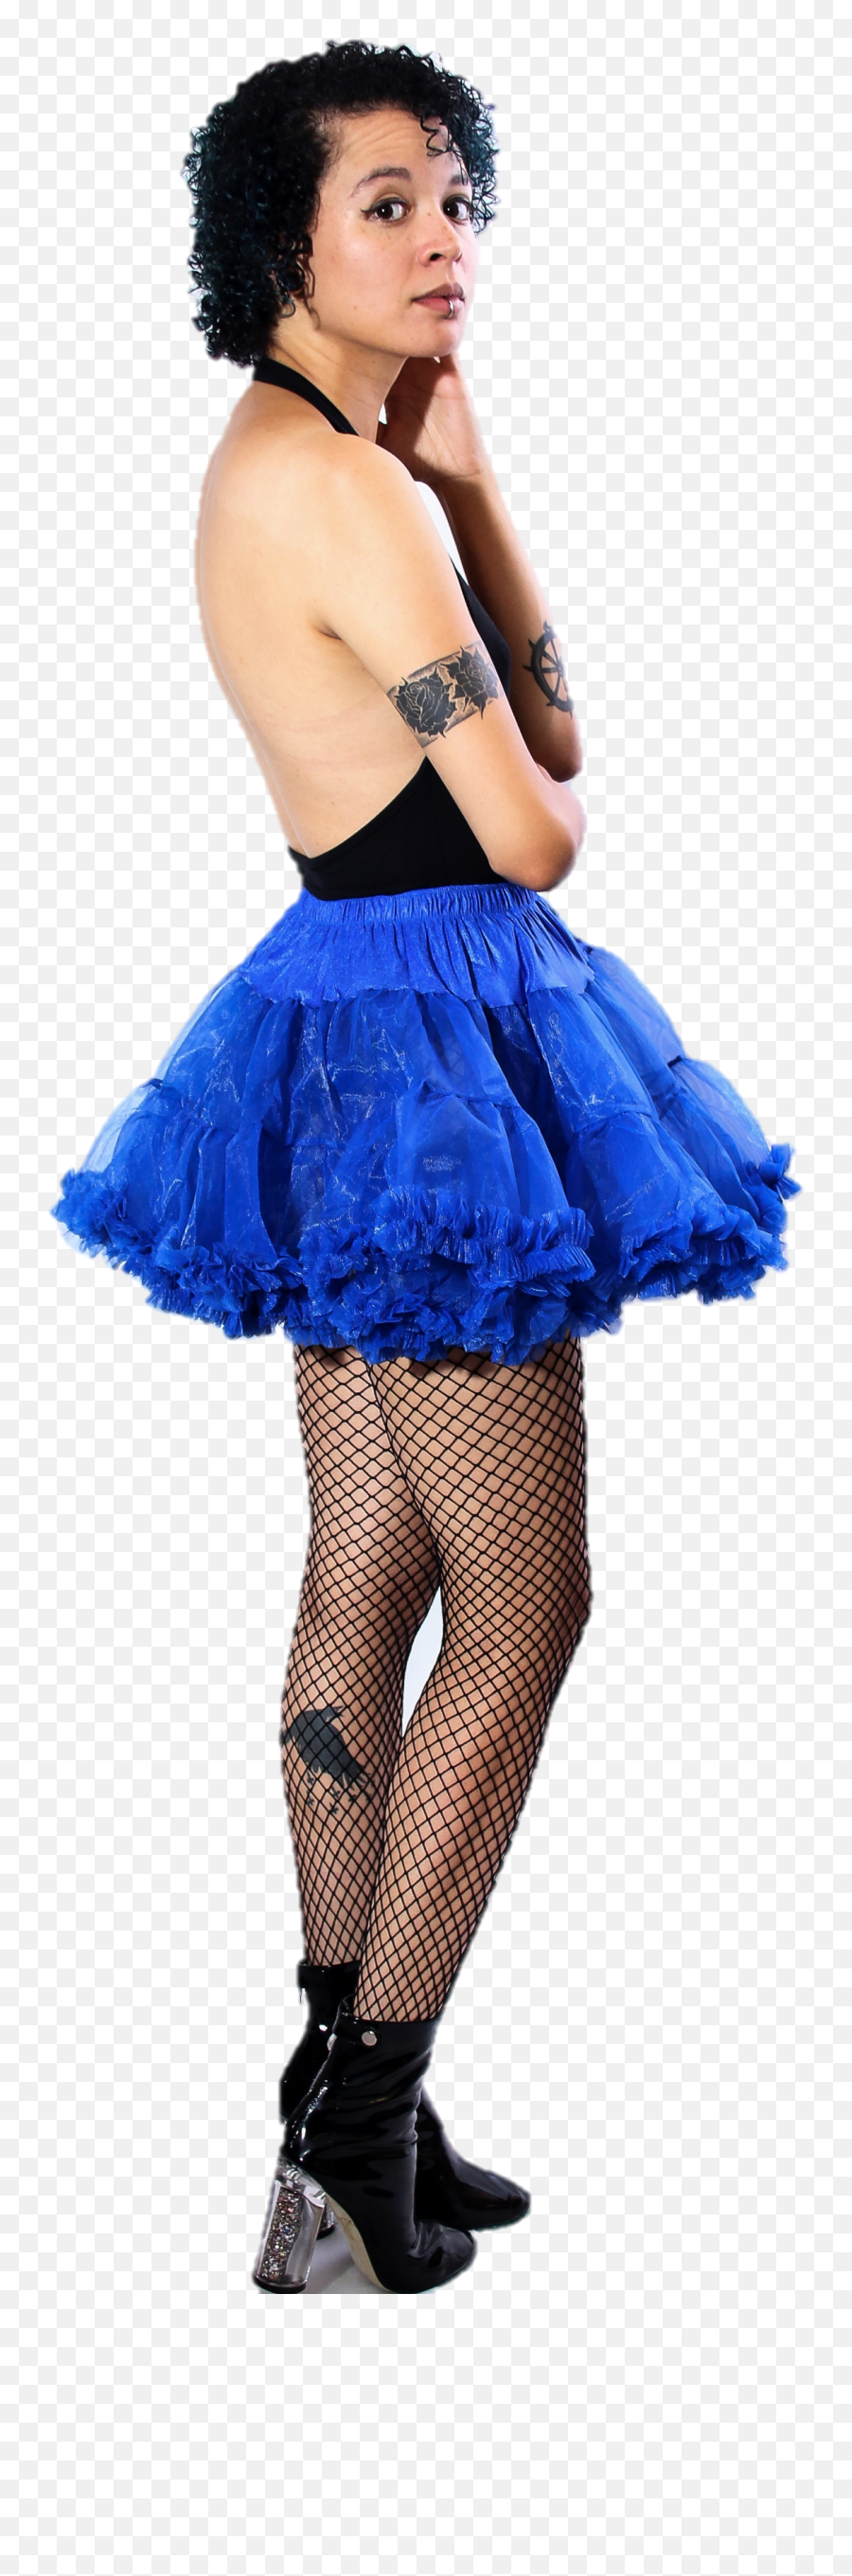 Girls Luxury Petticoat Poodle Skirt Costume Crinoline Underskirt Emoji,Skirt Png